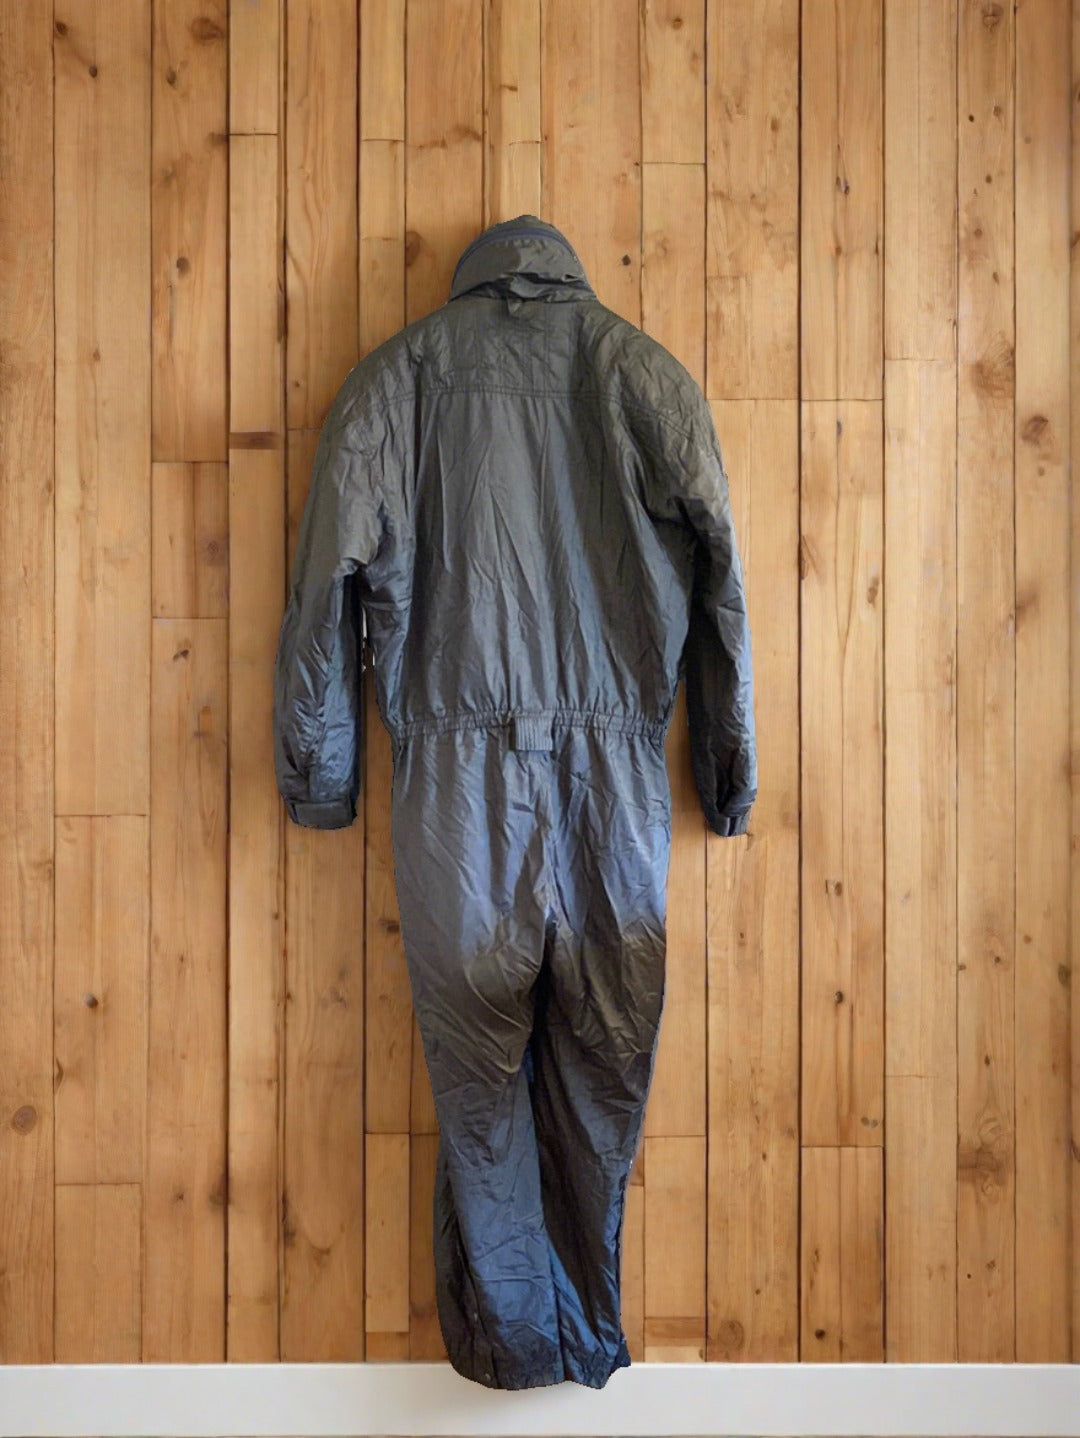 Rear view: Dark Olive Green Couloir 1-piece ski suit